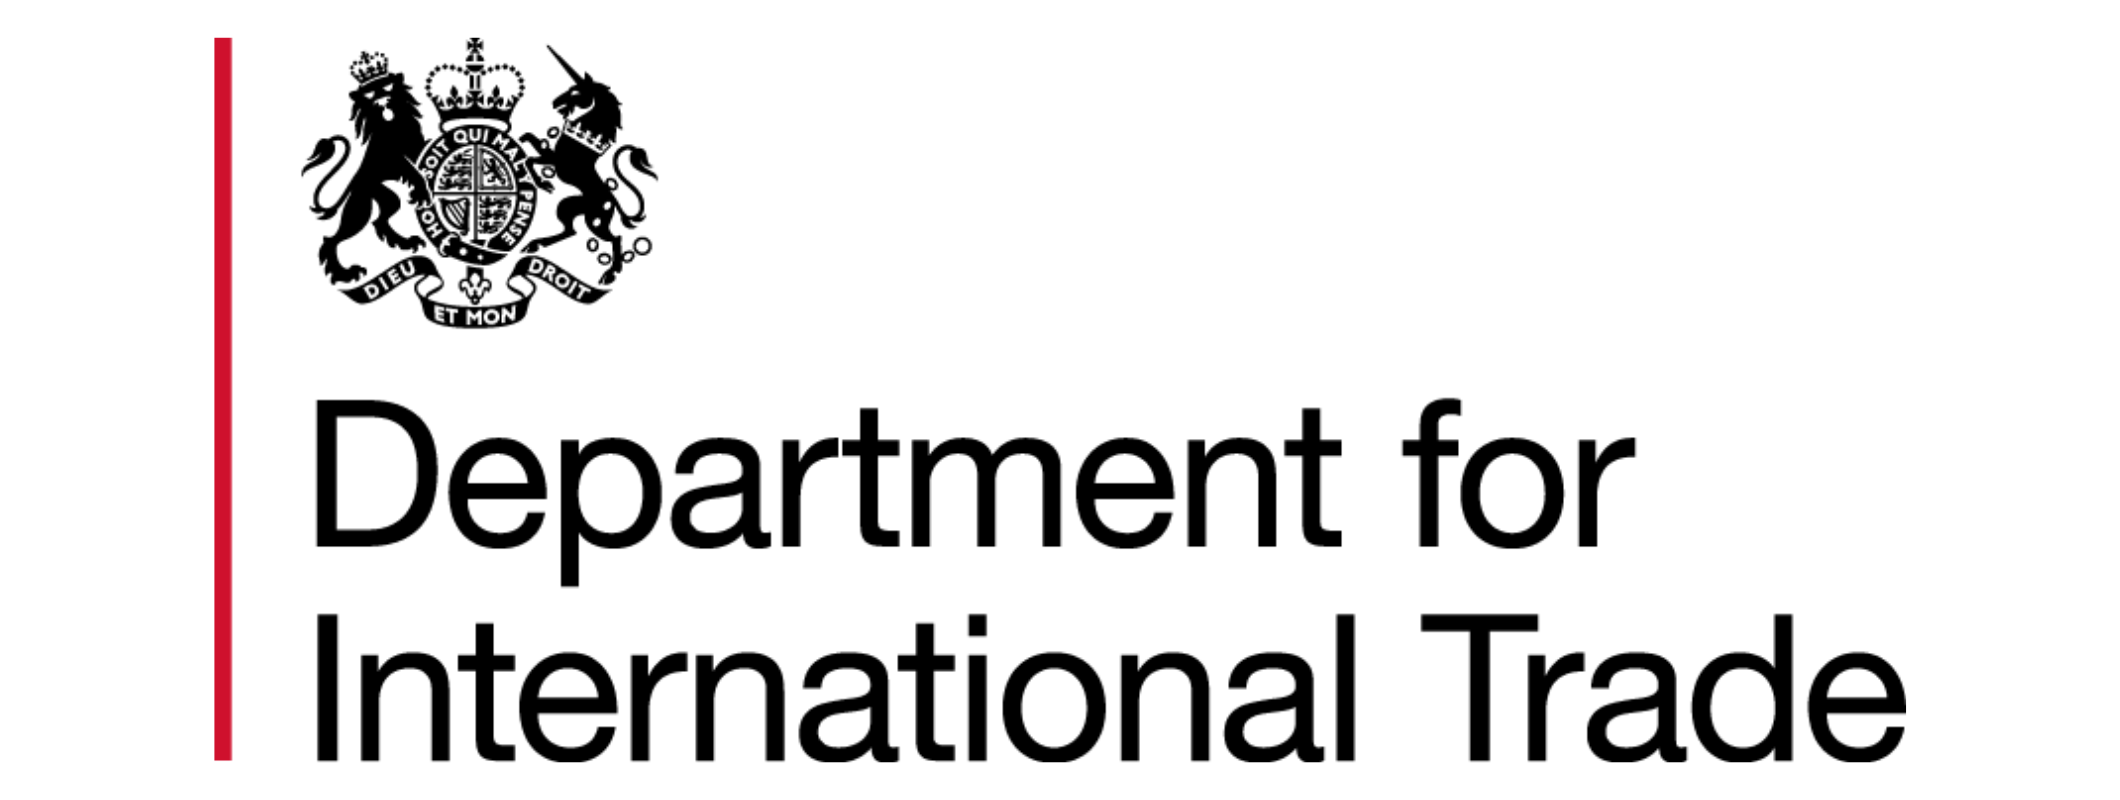 Department for International Trade-2